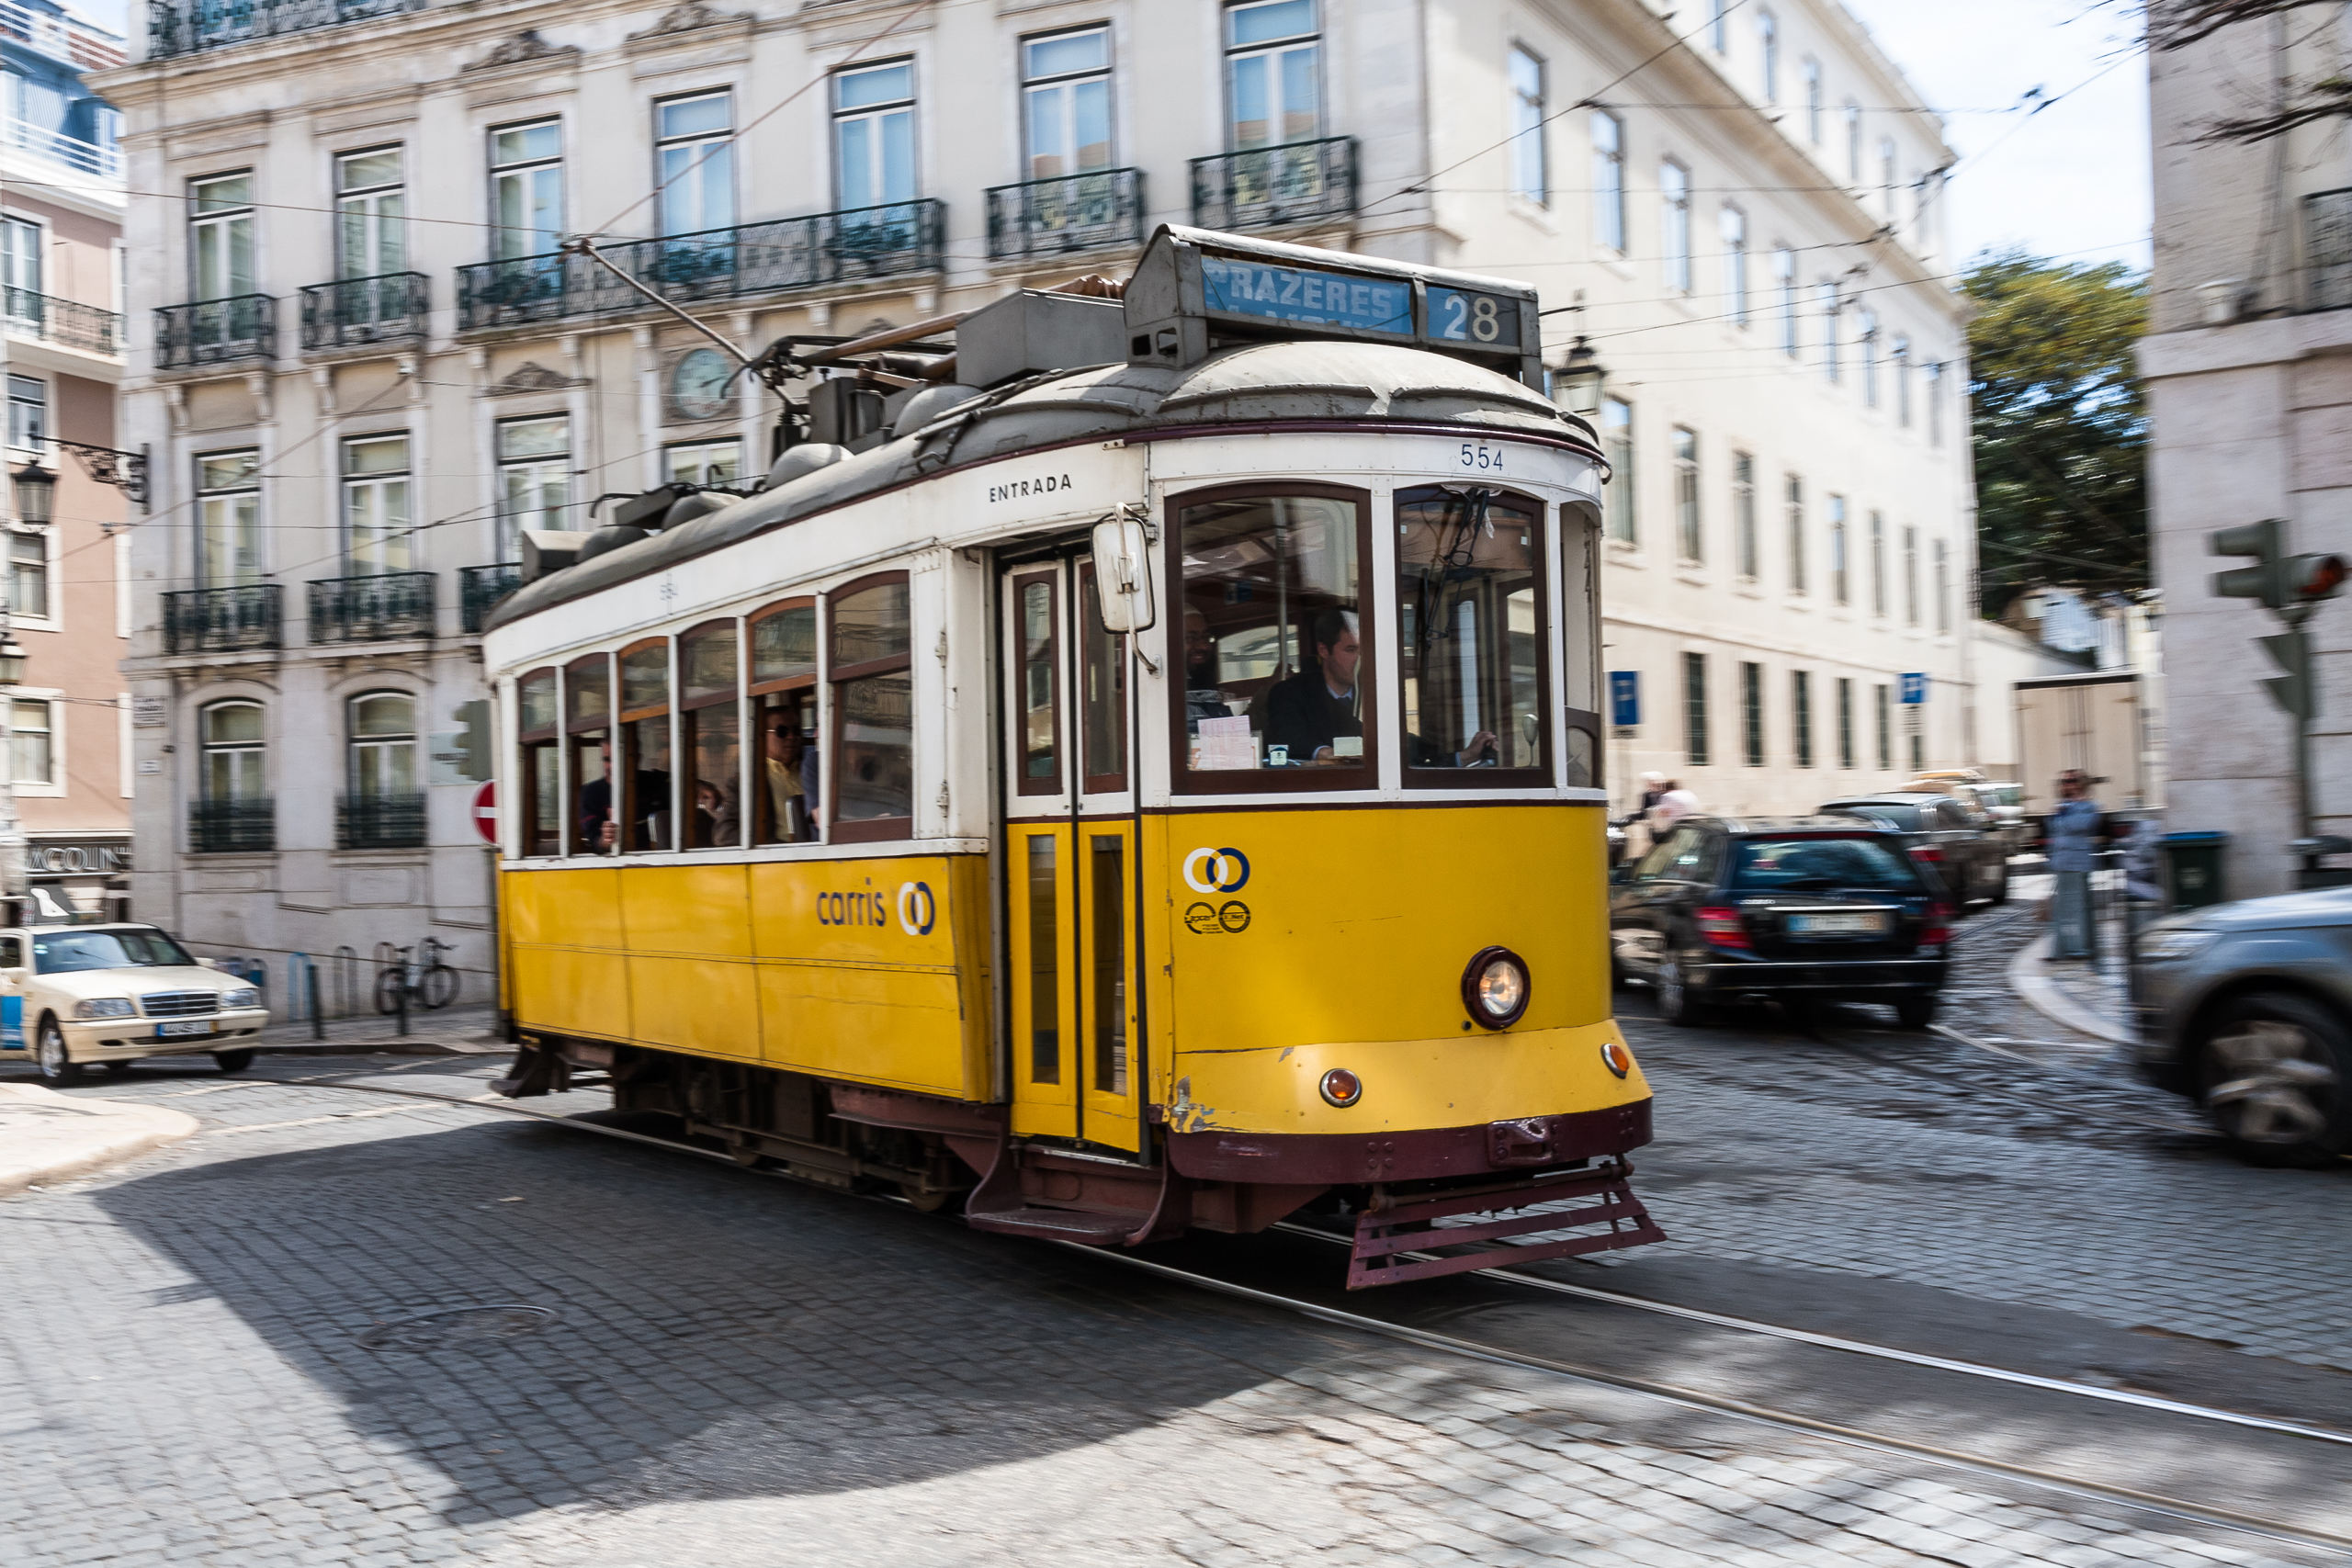 Elétrico em Lisboa